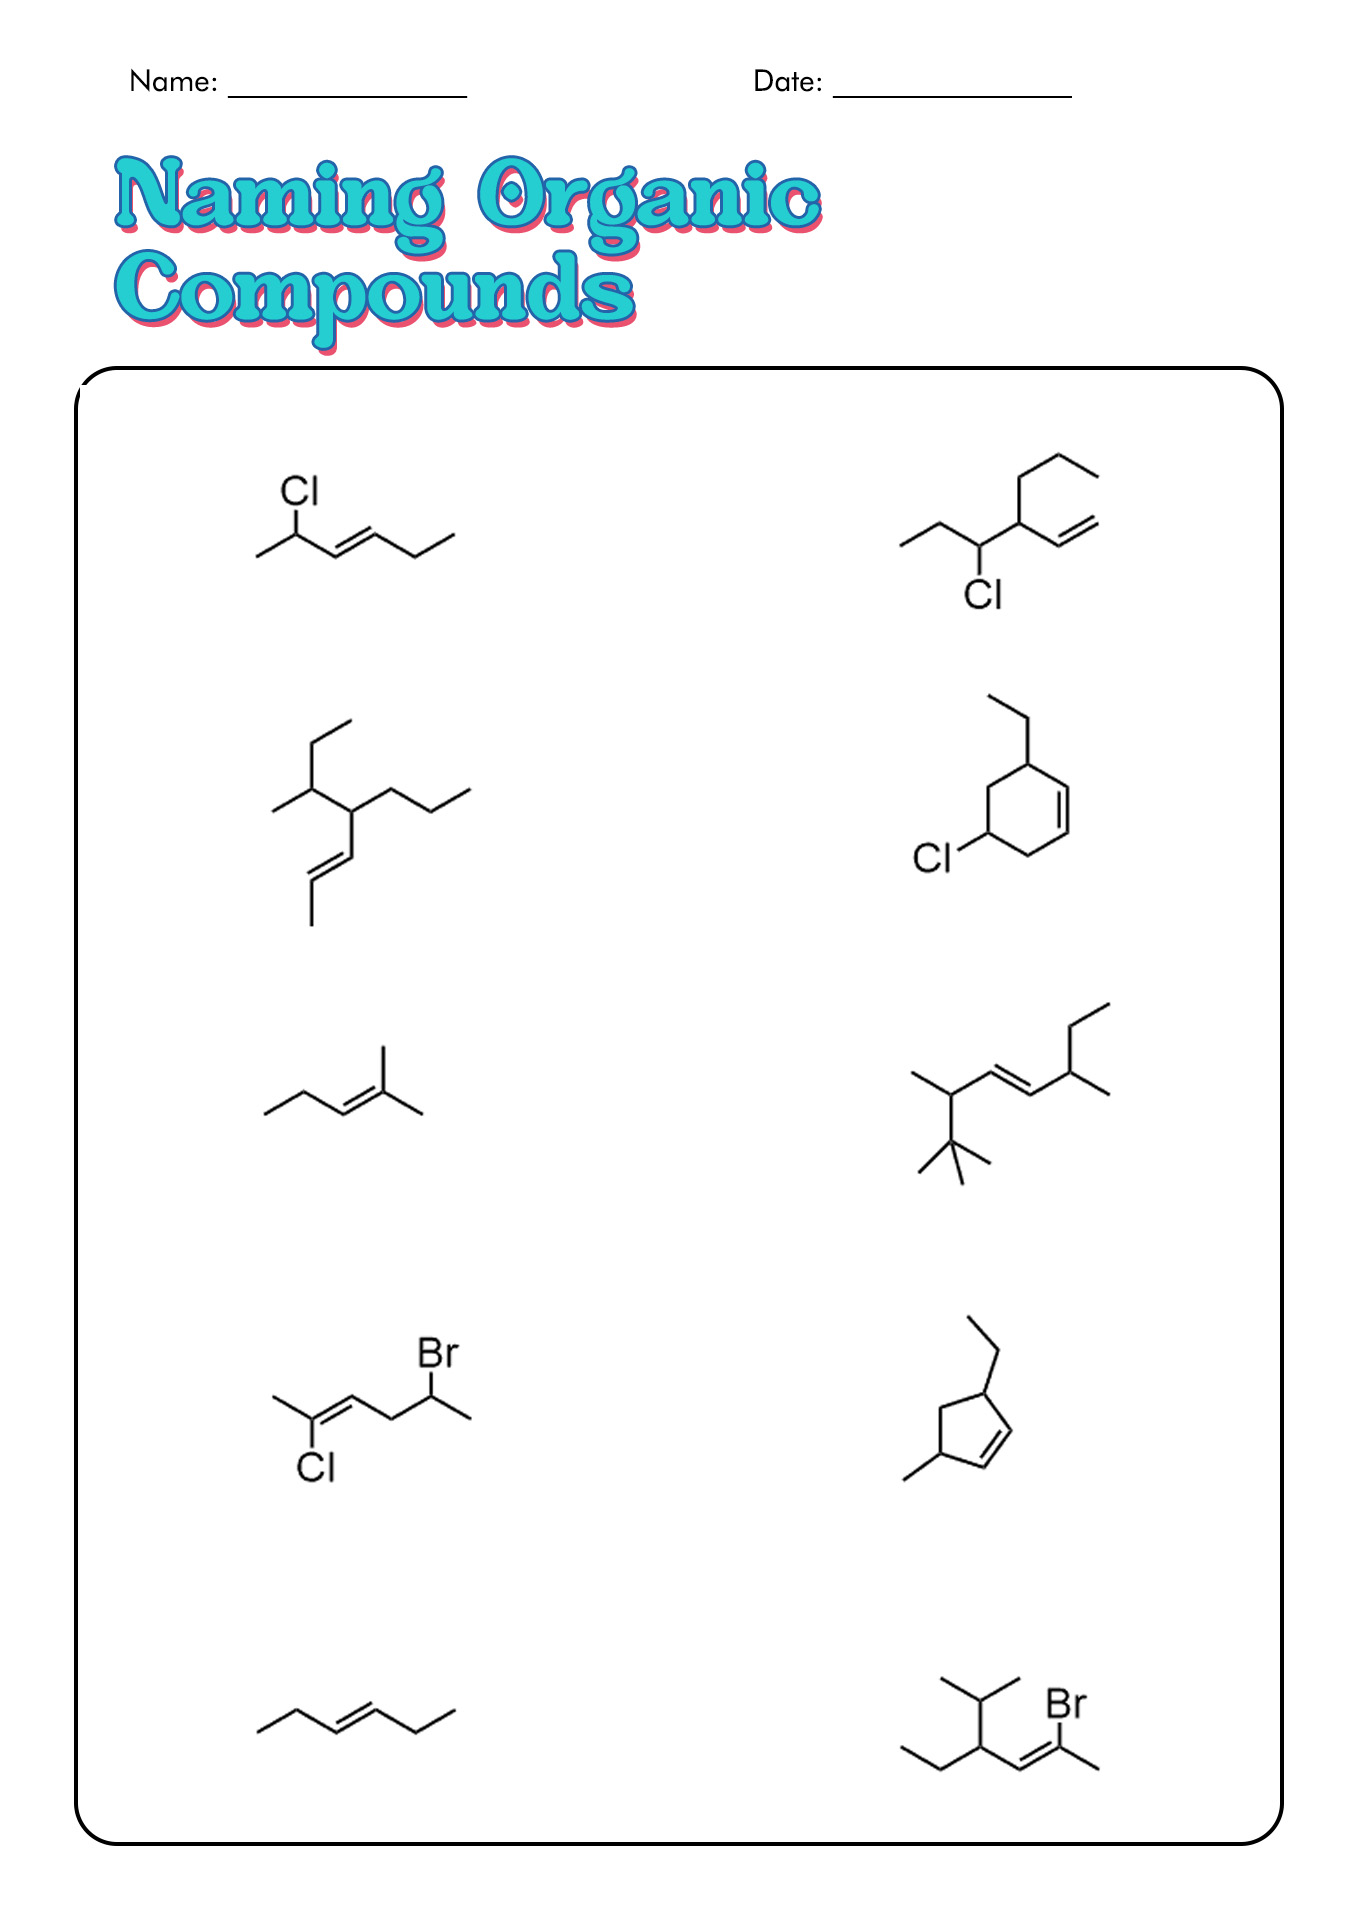 Naming Organic Compounds Practice Worksheet Image